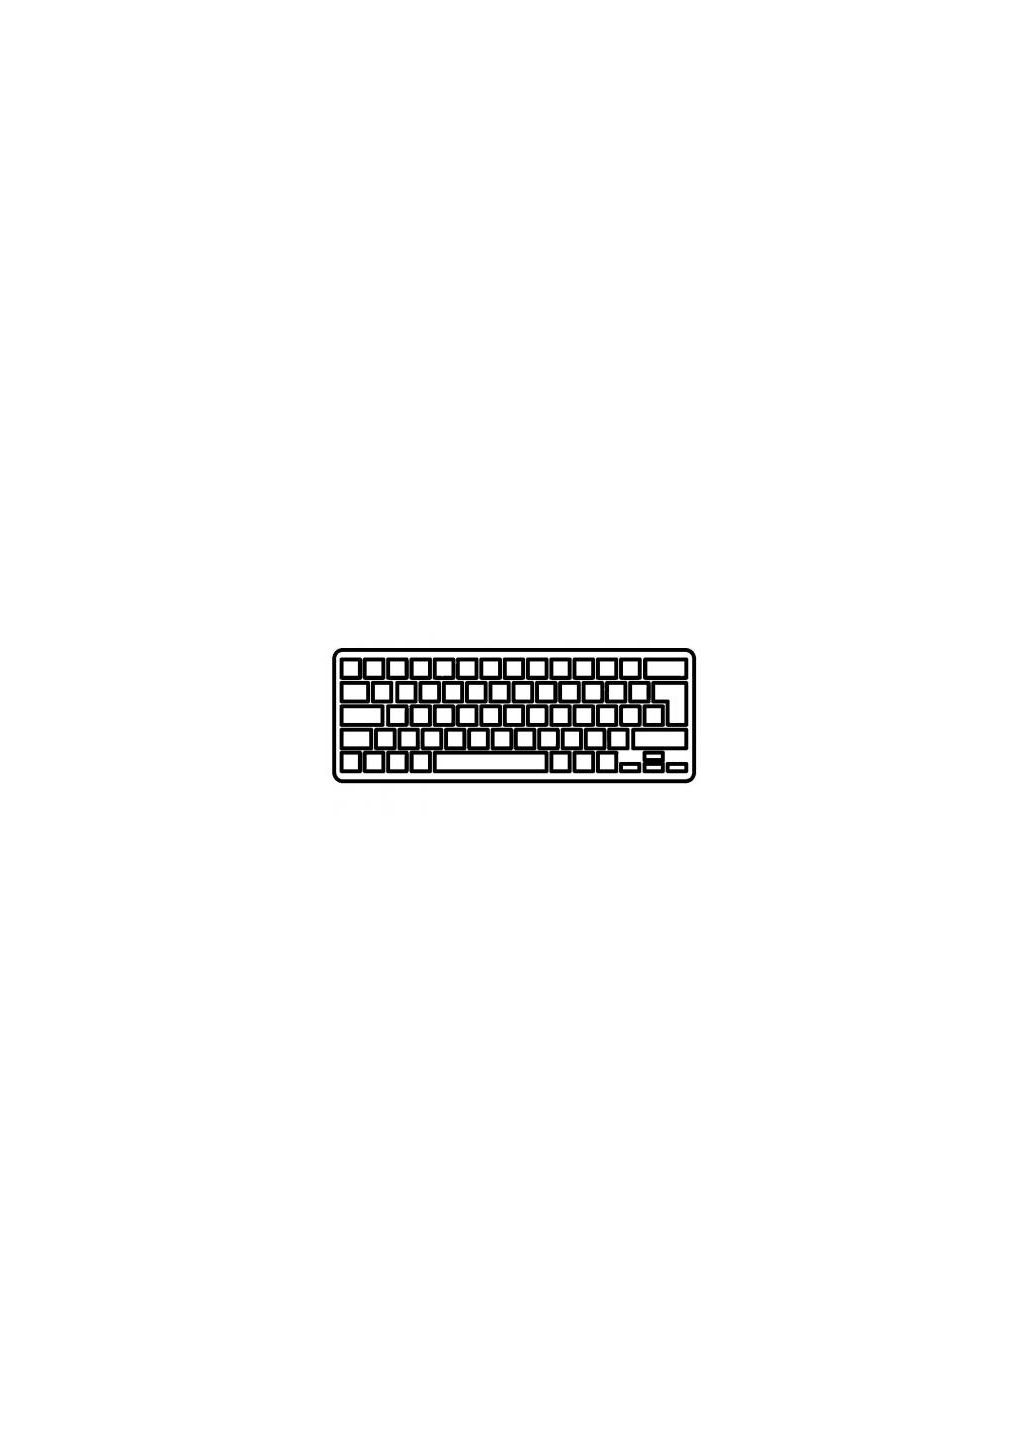 Клавиатура ноутбука Pavilion SleekBook 14B Series черная без рамки RU (A43730) HP pavilion sleekbook 14-b series черная без рамки ua (276707611)